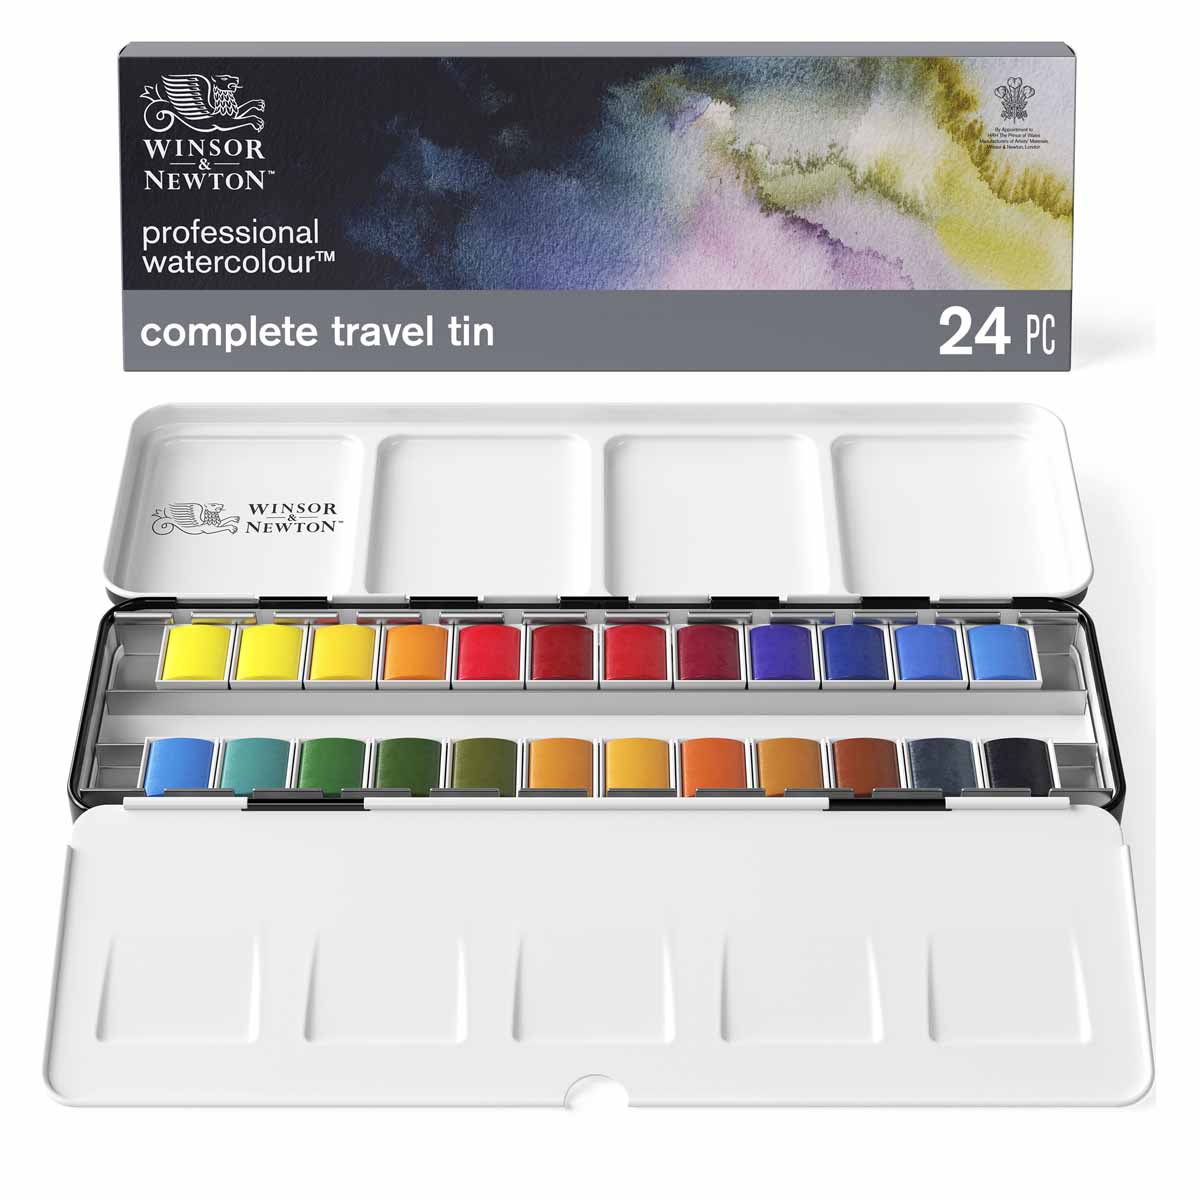 Winsor & Newton Professional Watercolor Half Pan Complete Travel Tin Set of 24